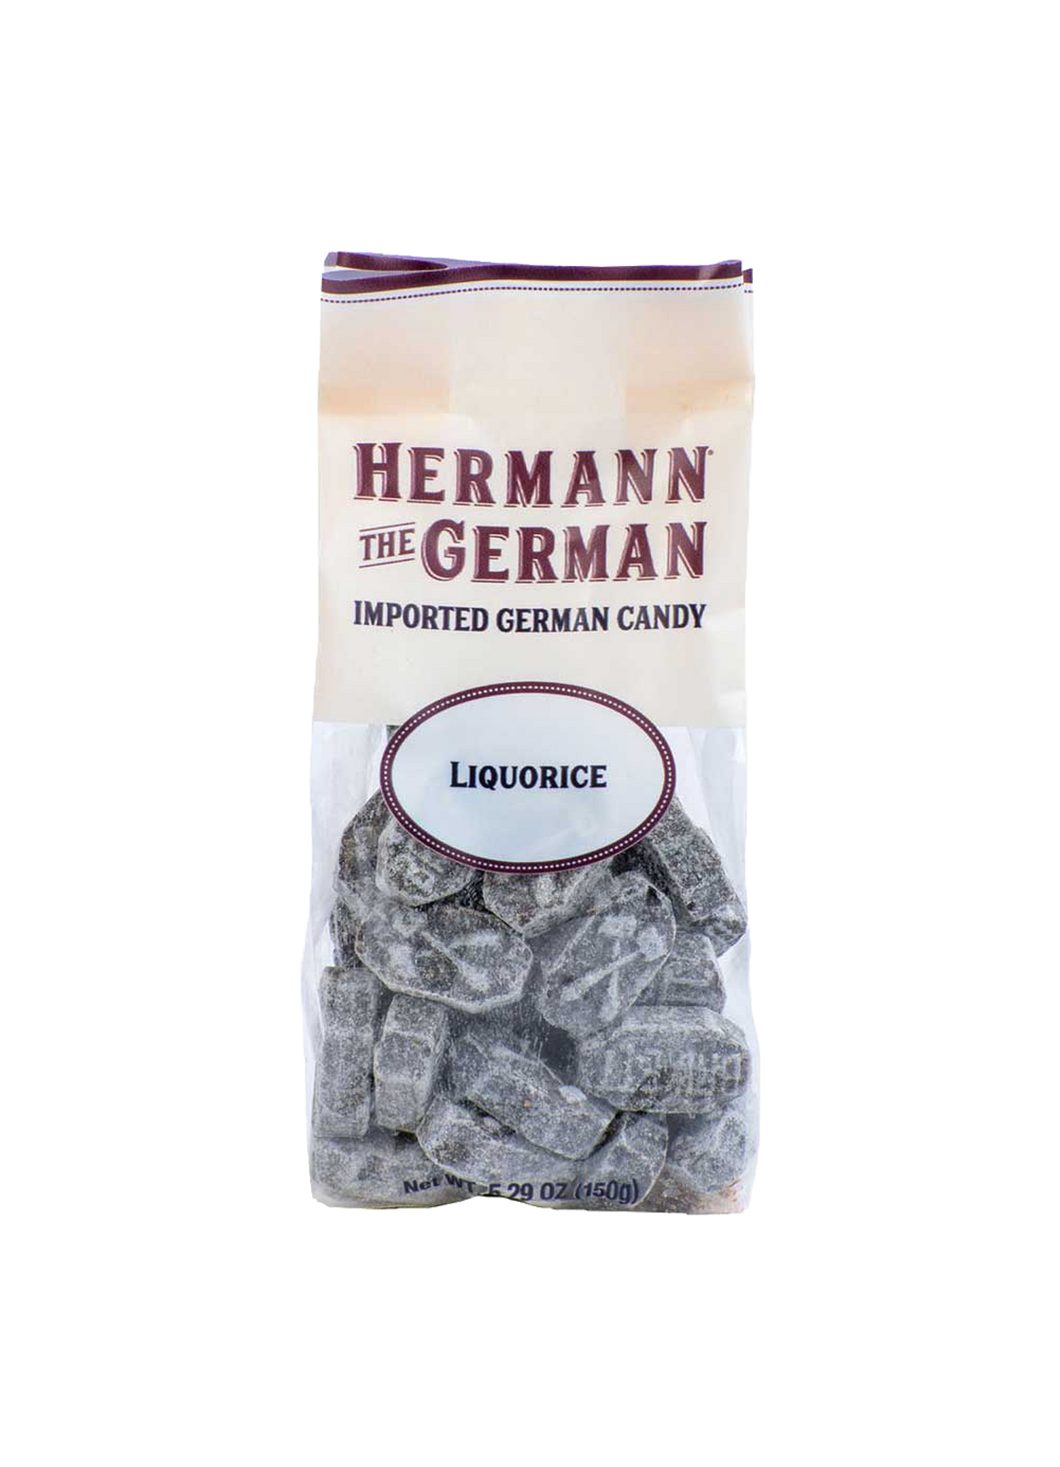 Hermann The German Candy Liquorice 150g